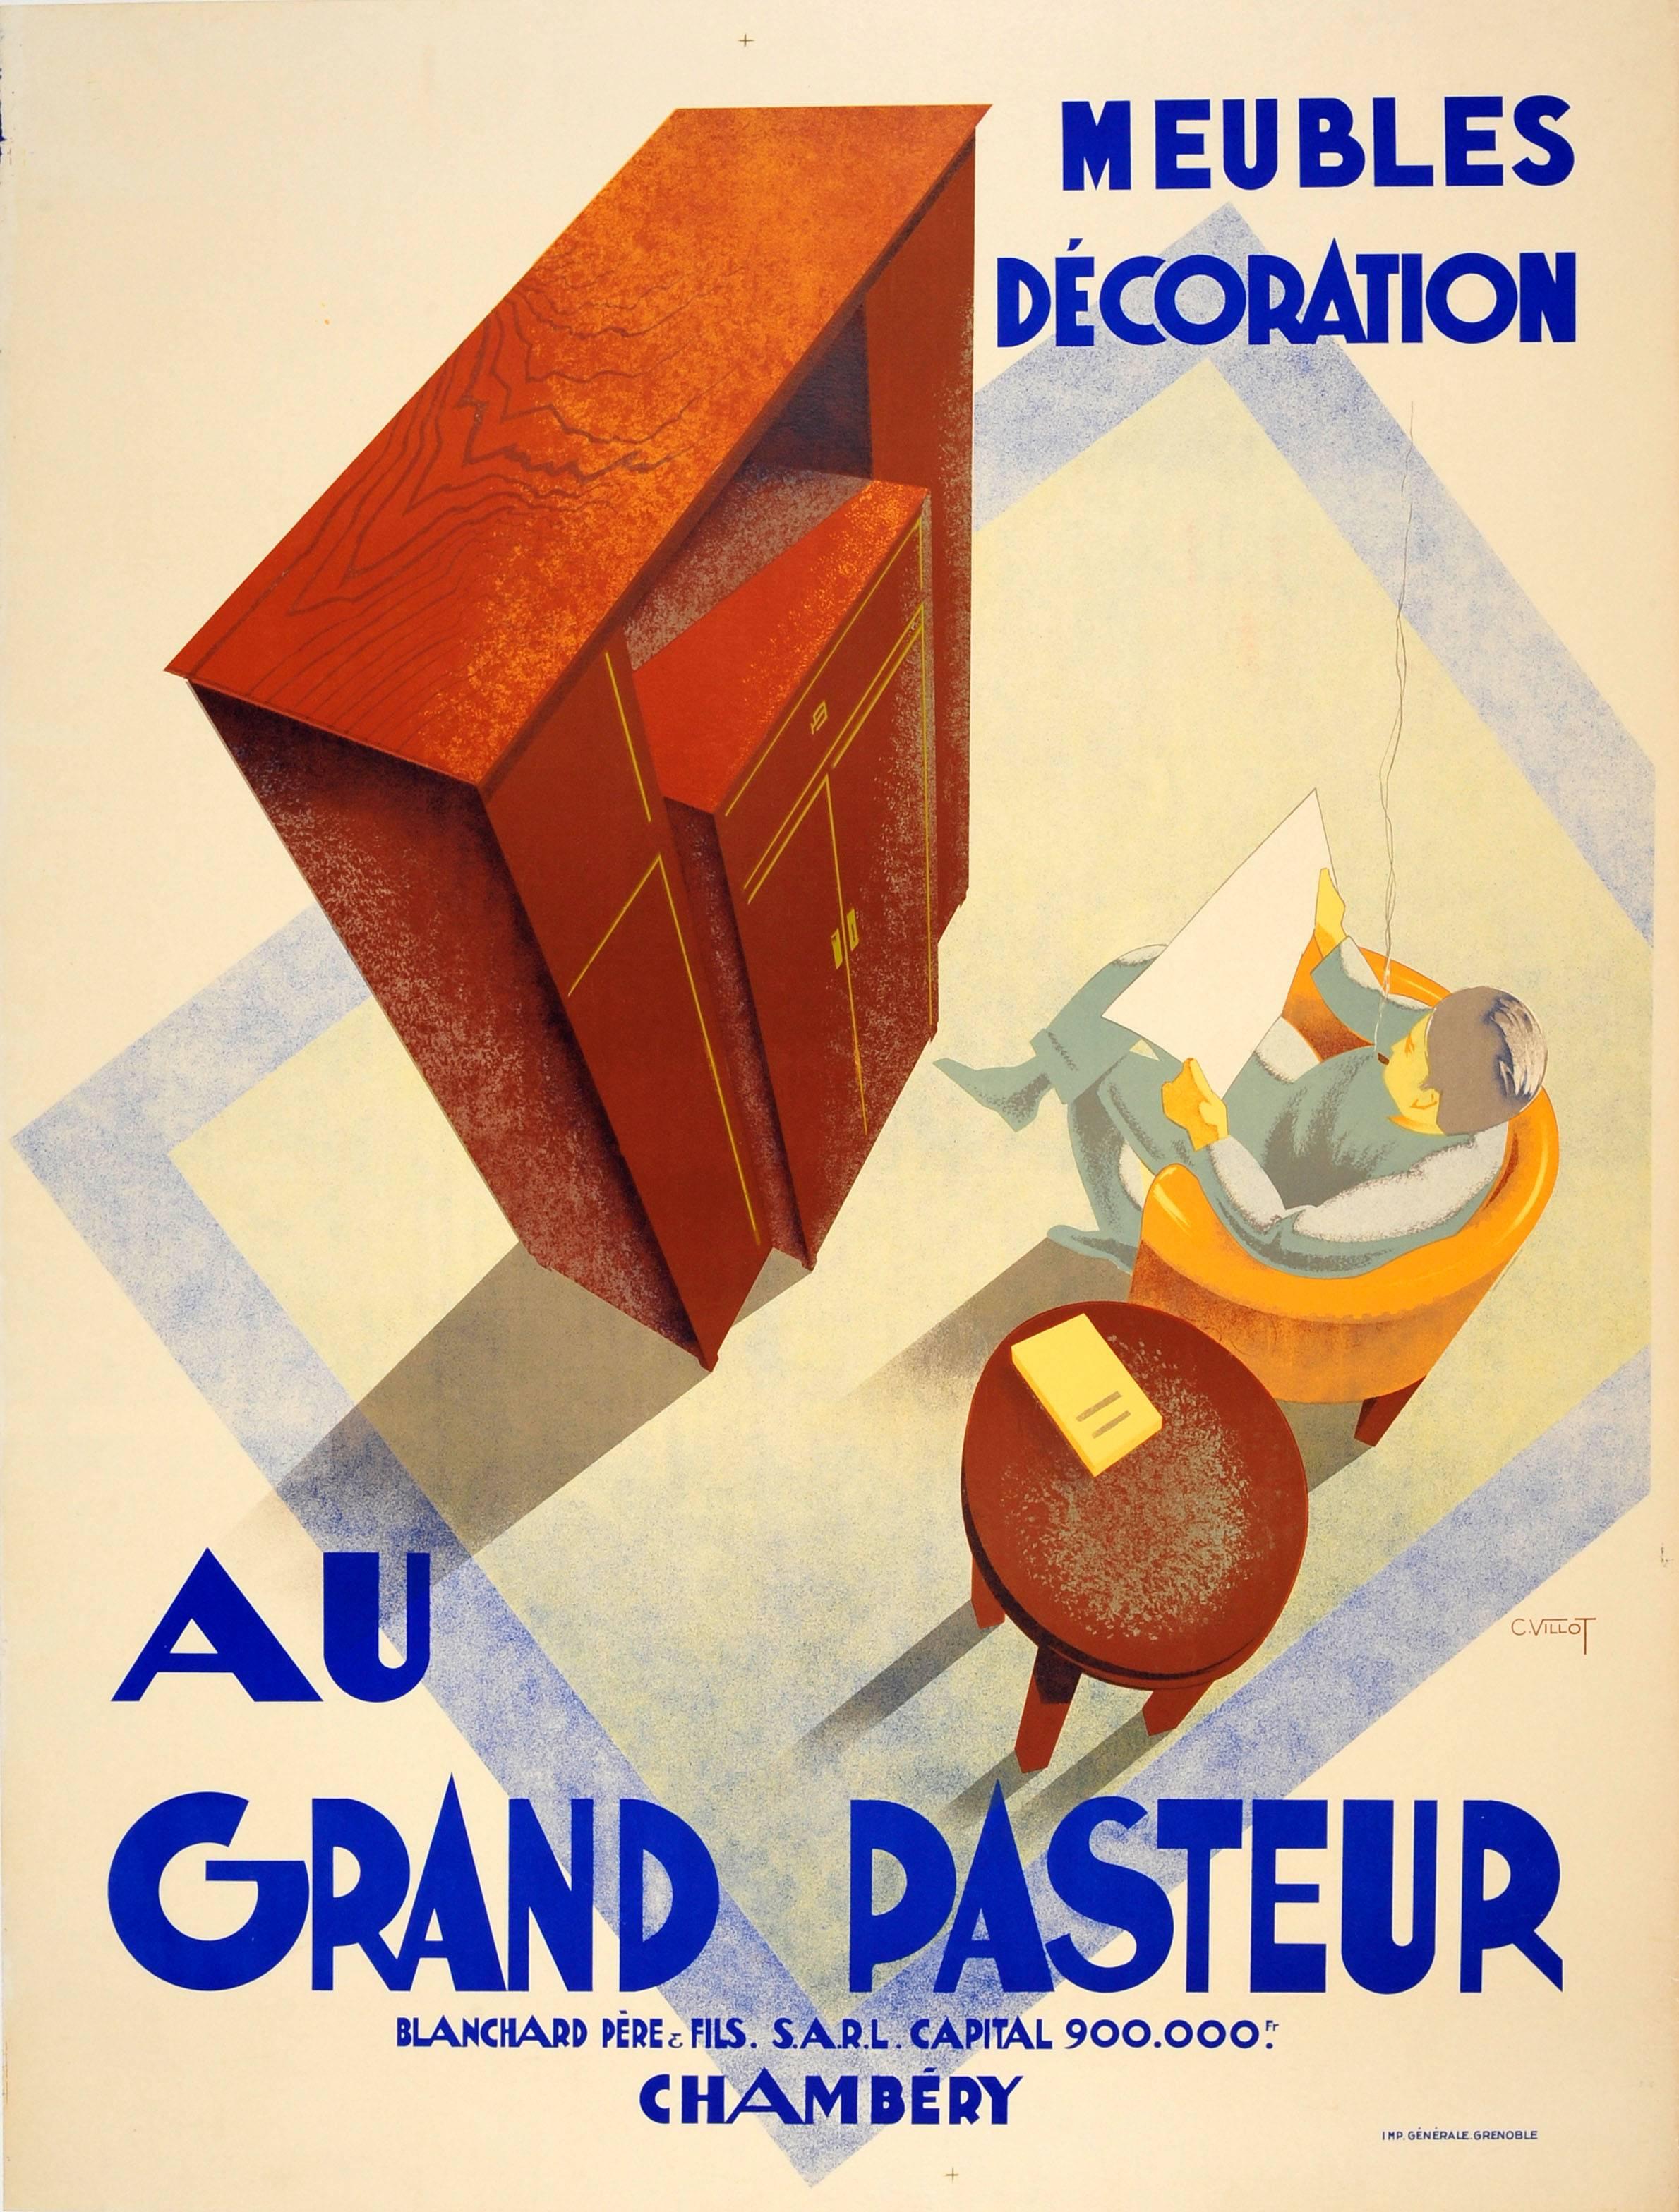 C. Villot Print - Large Original 1920s Art Deco Furniture Advertising Poster For Grand Pasteur